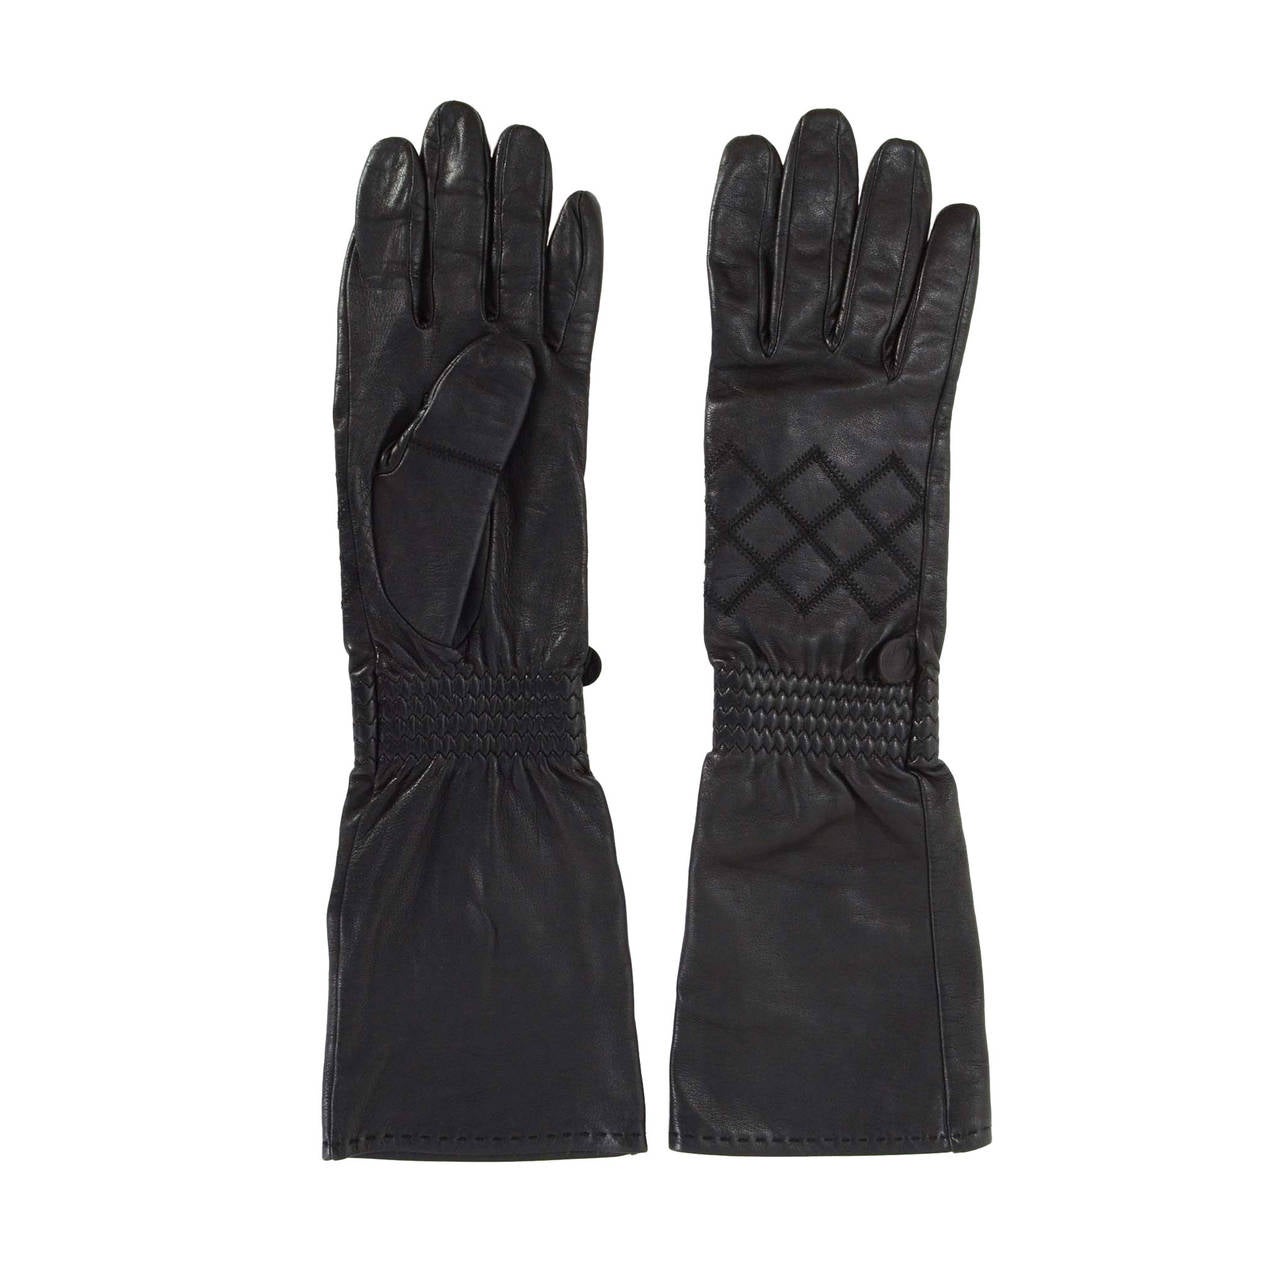 CHANEL Black Leather 3/4 Sleeve Gloves sz 7.5